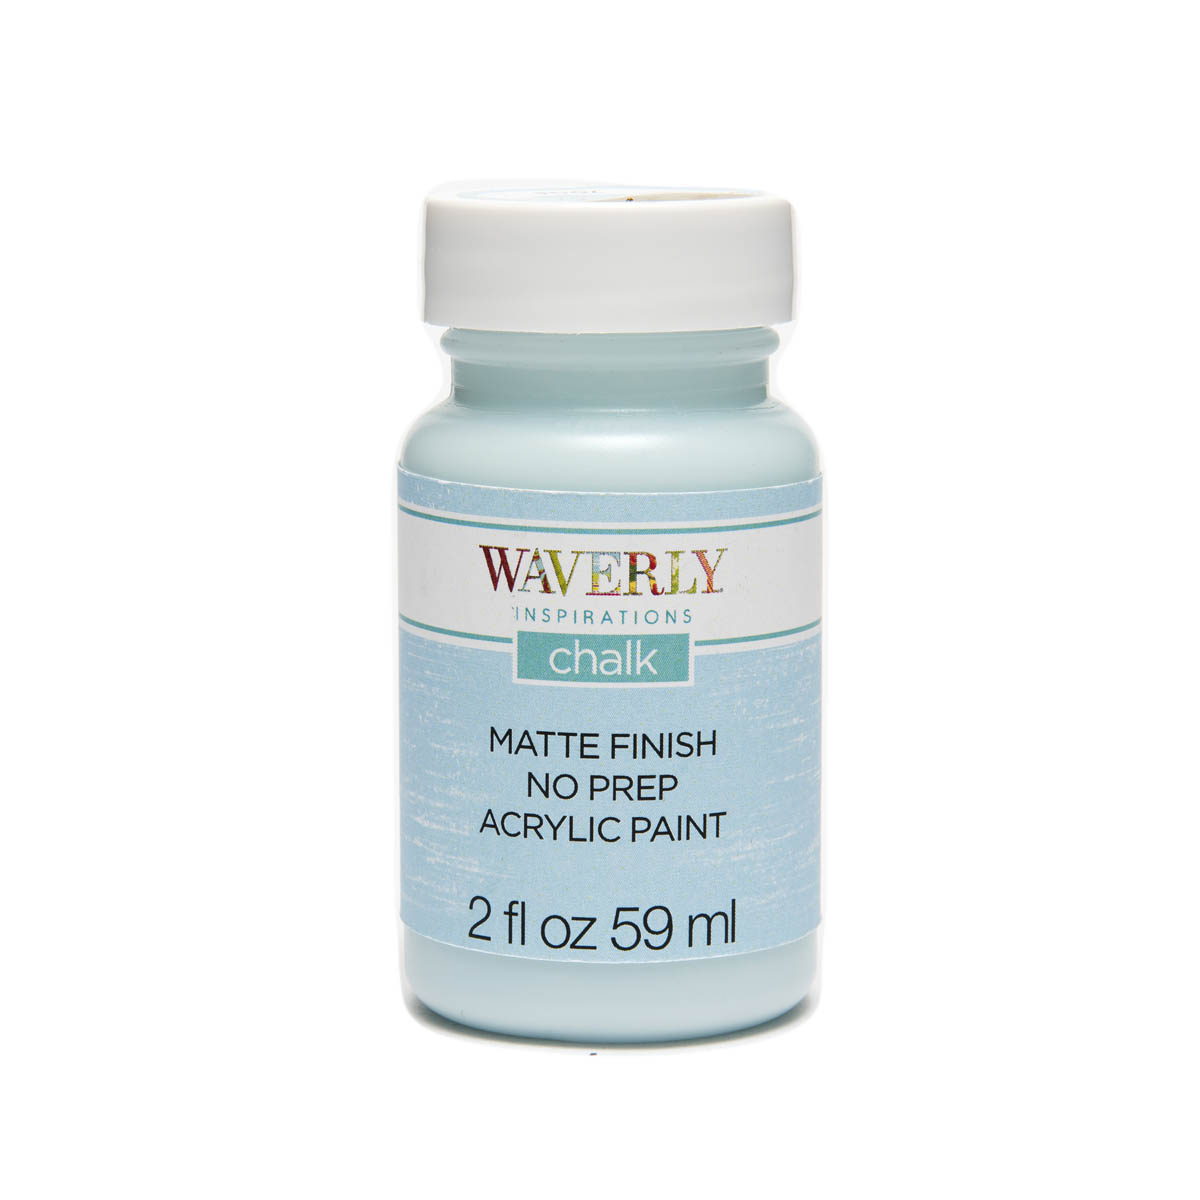 Waverly ® Inspirations Chalk Finish Acrylic Paint - Pool, 2 oz. - 60887E